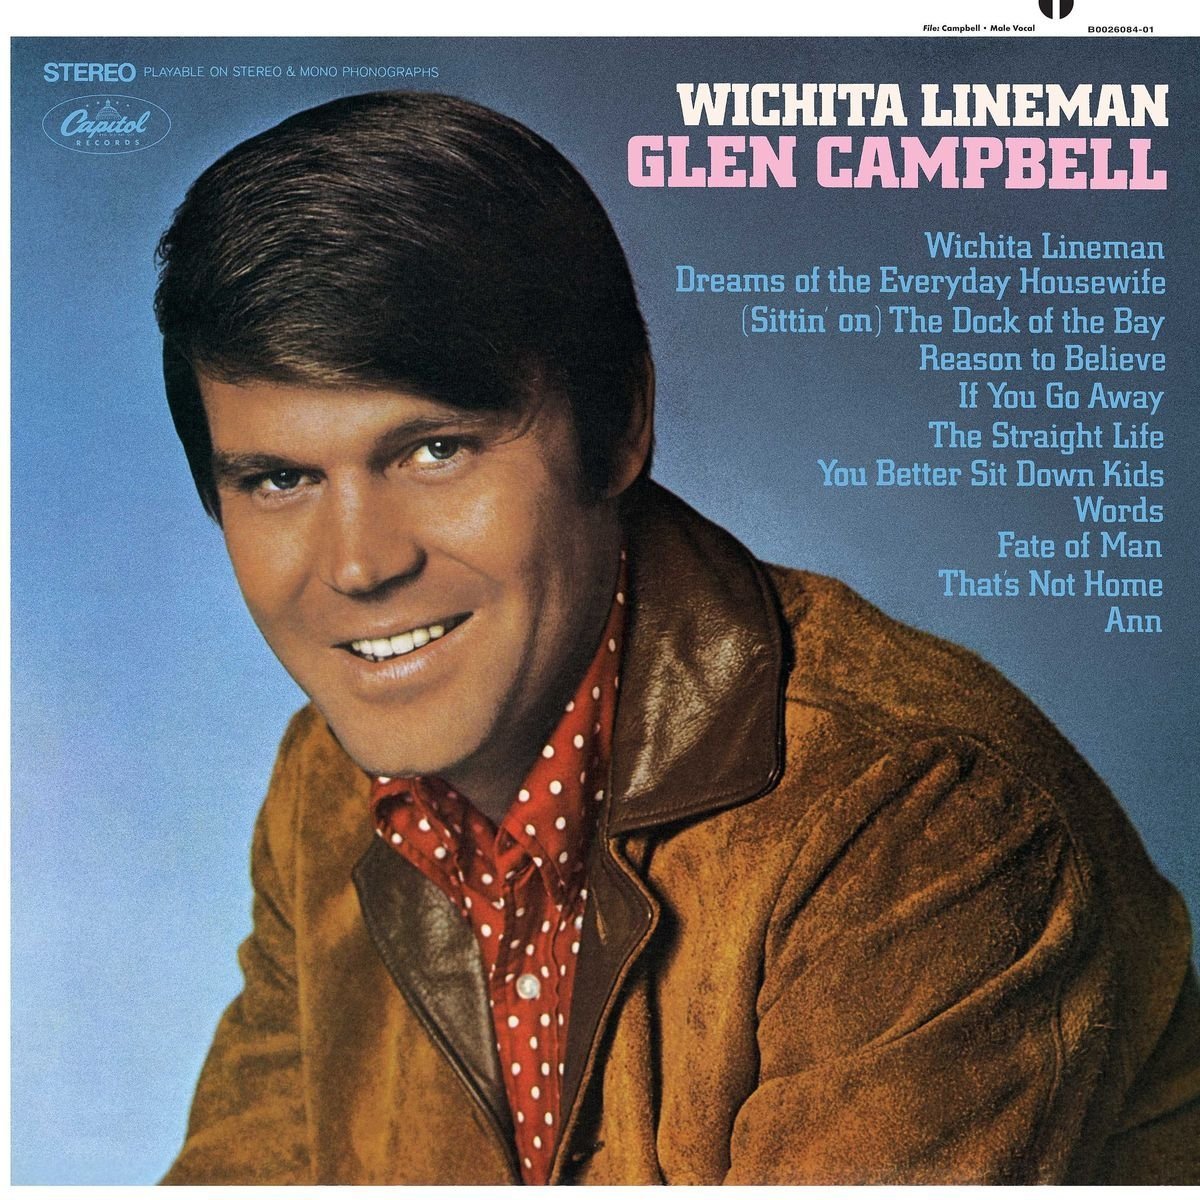 Glen Campbell - Wichita Lineman mp3 download